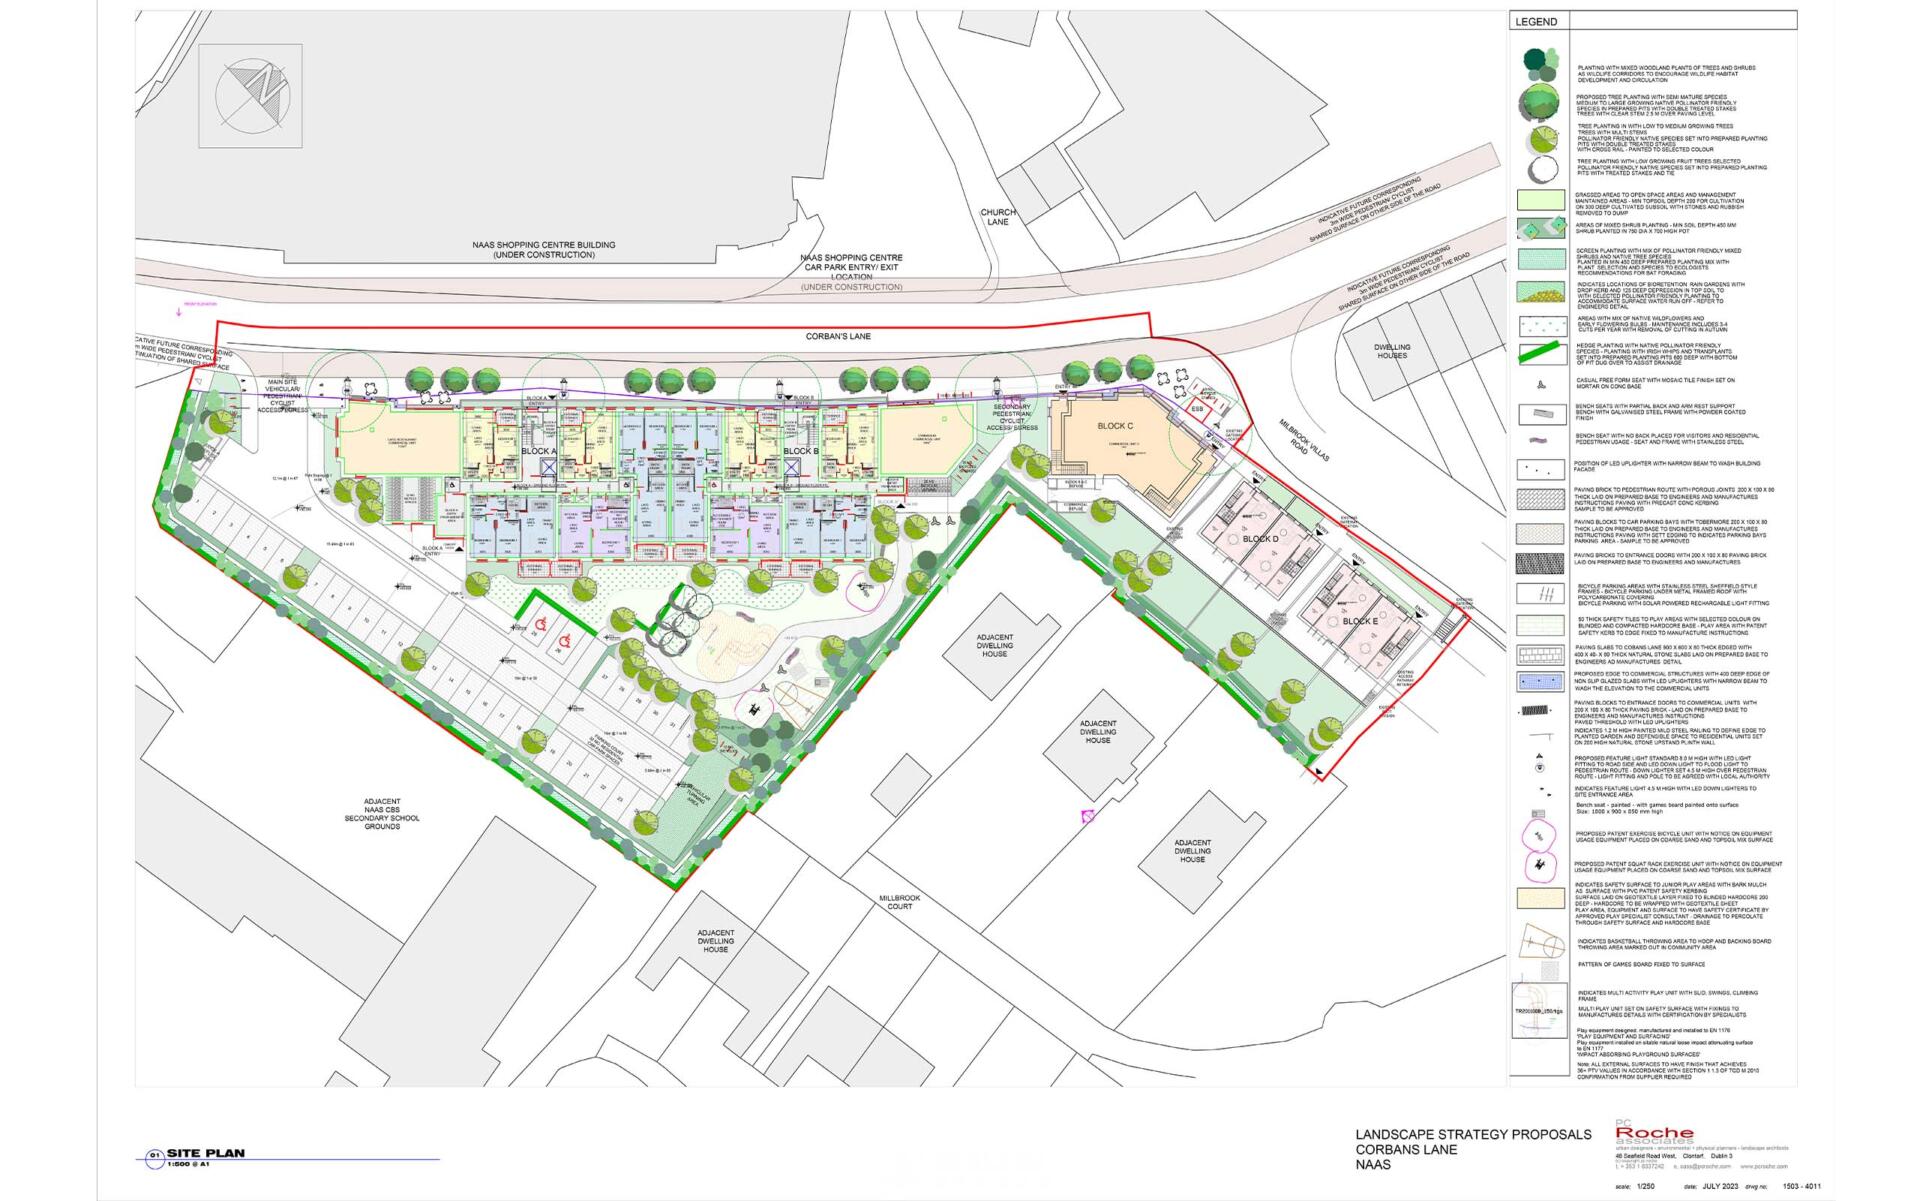 Landscape strategy proposals for Corban’s Lane development